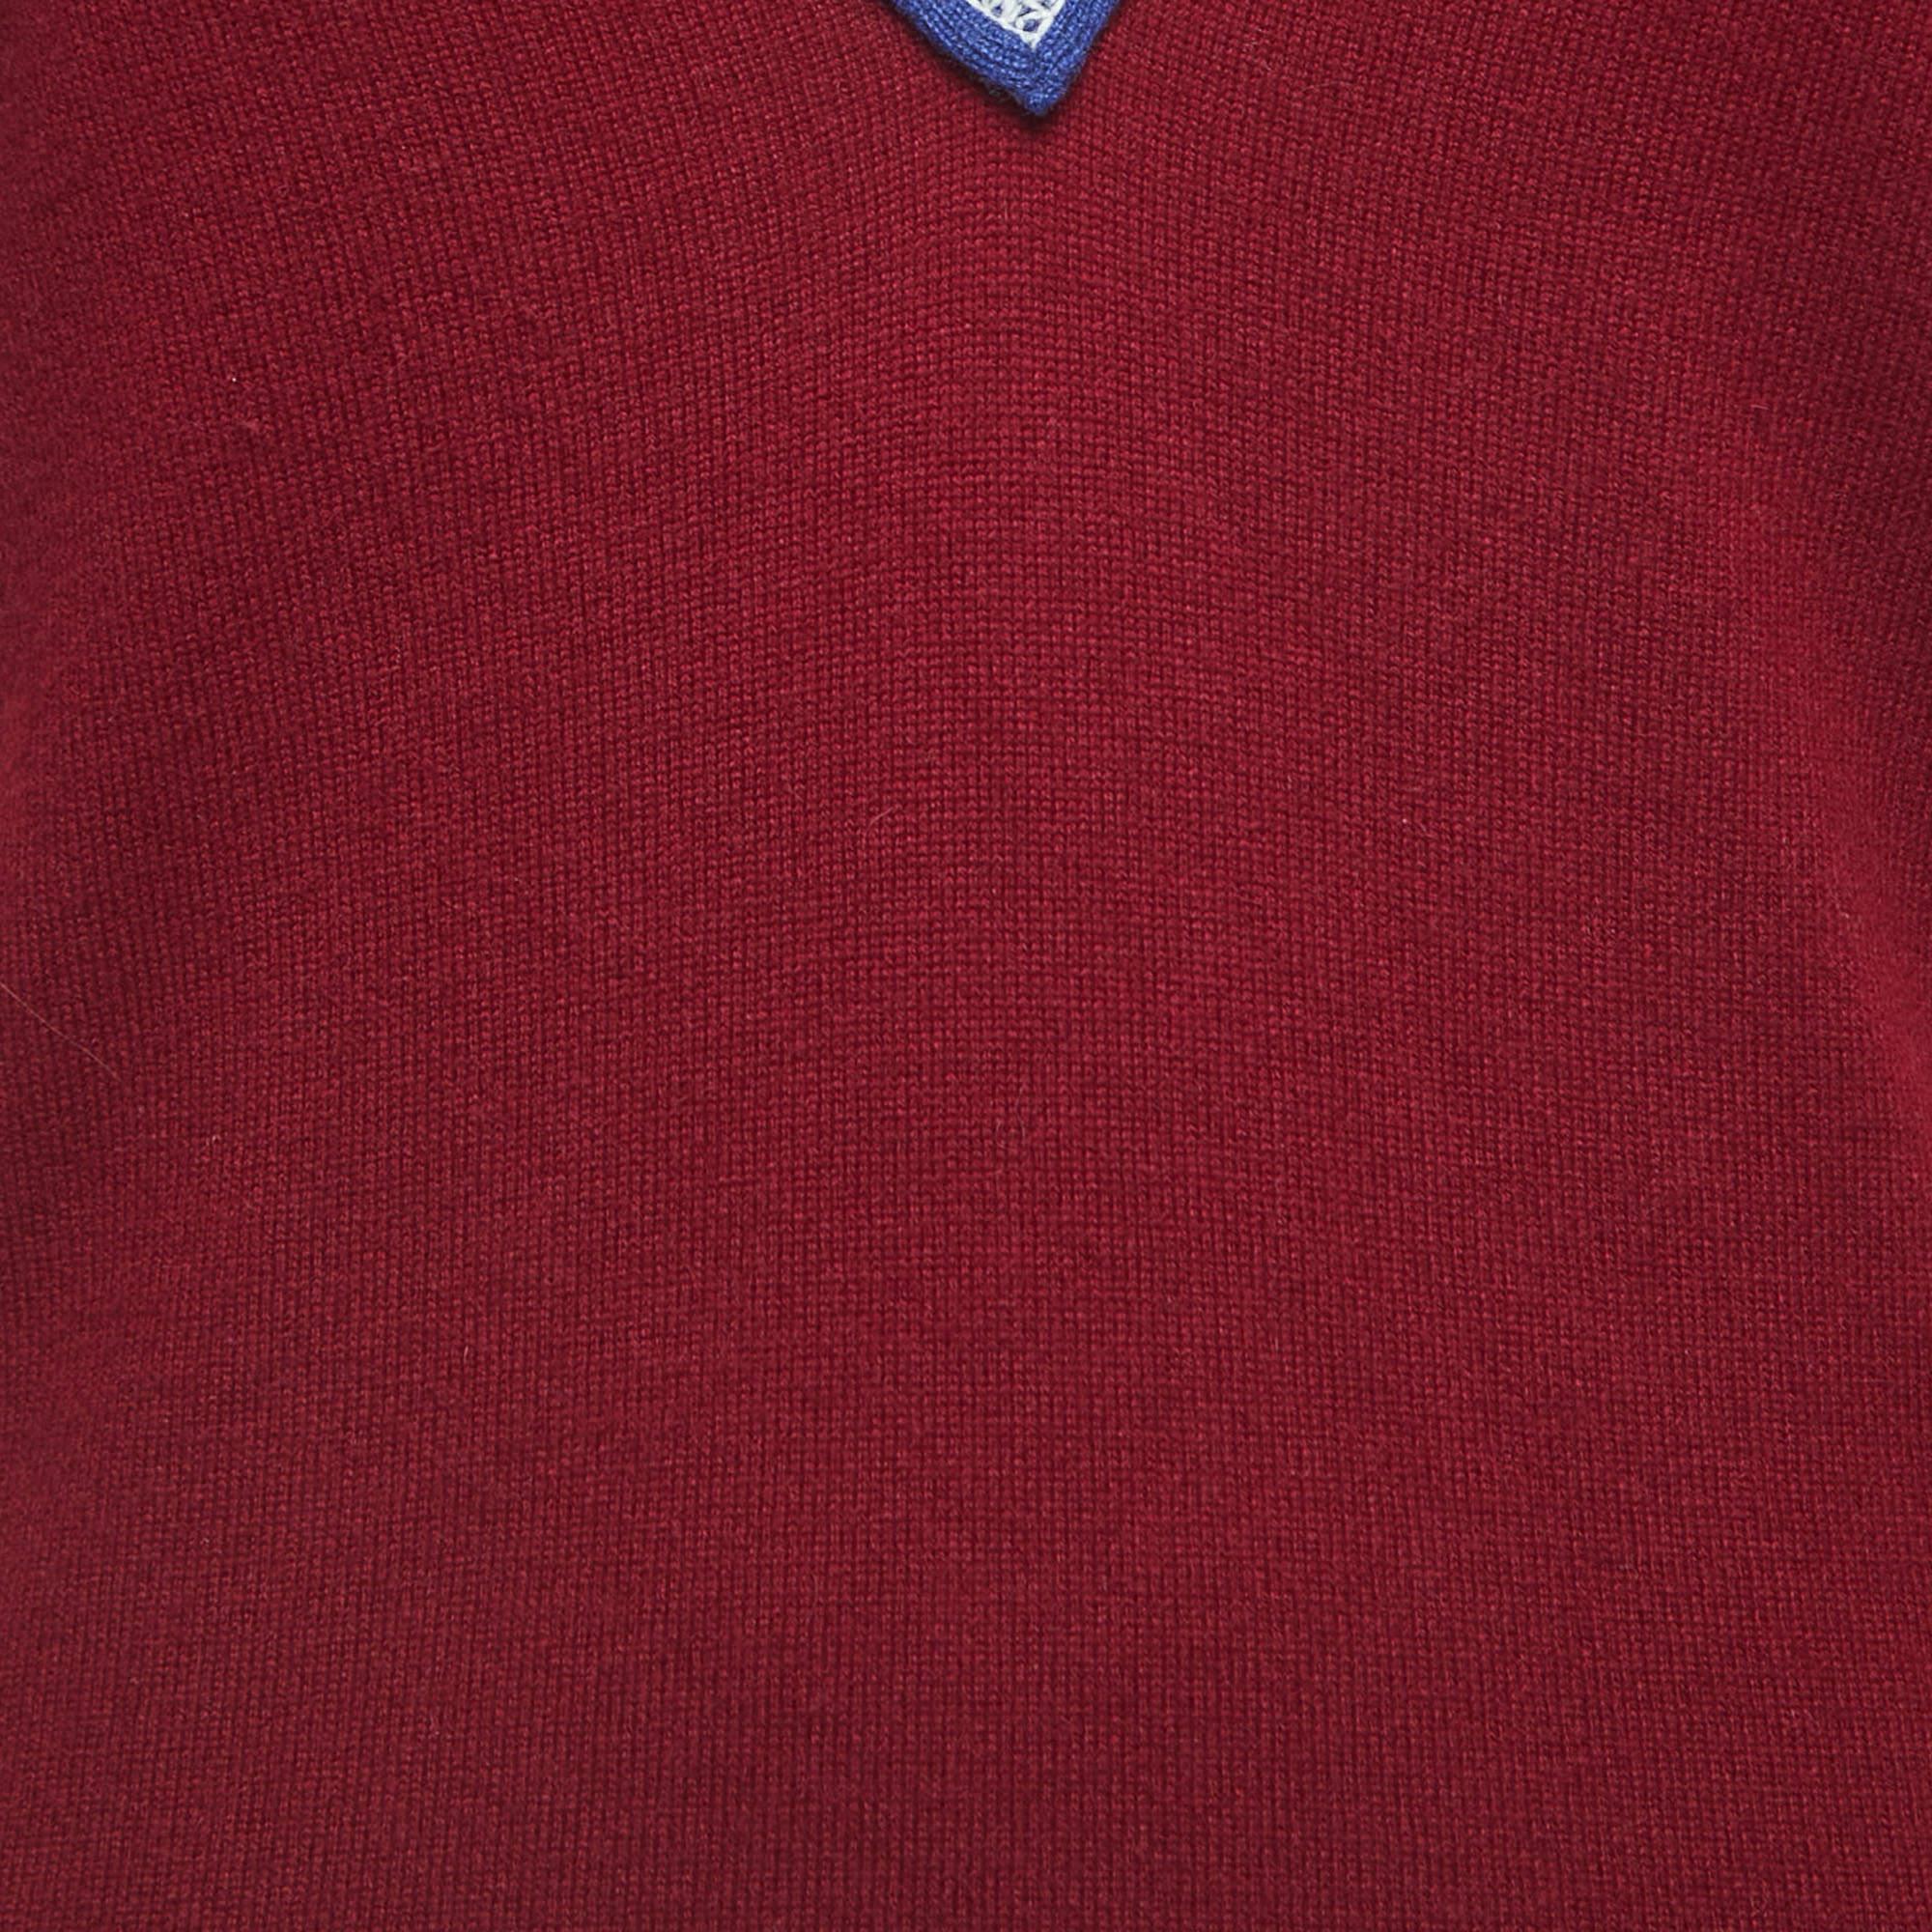 Chanel Sports Ivory/Burgundy Cashmere V-Neck Sweater S 1